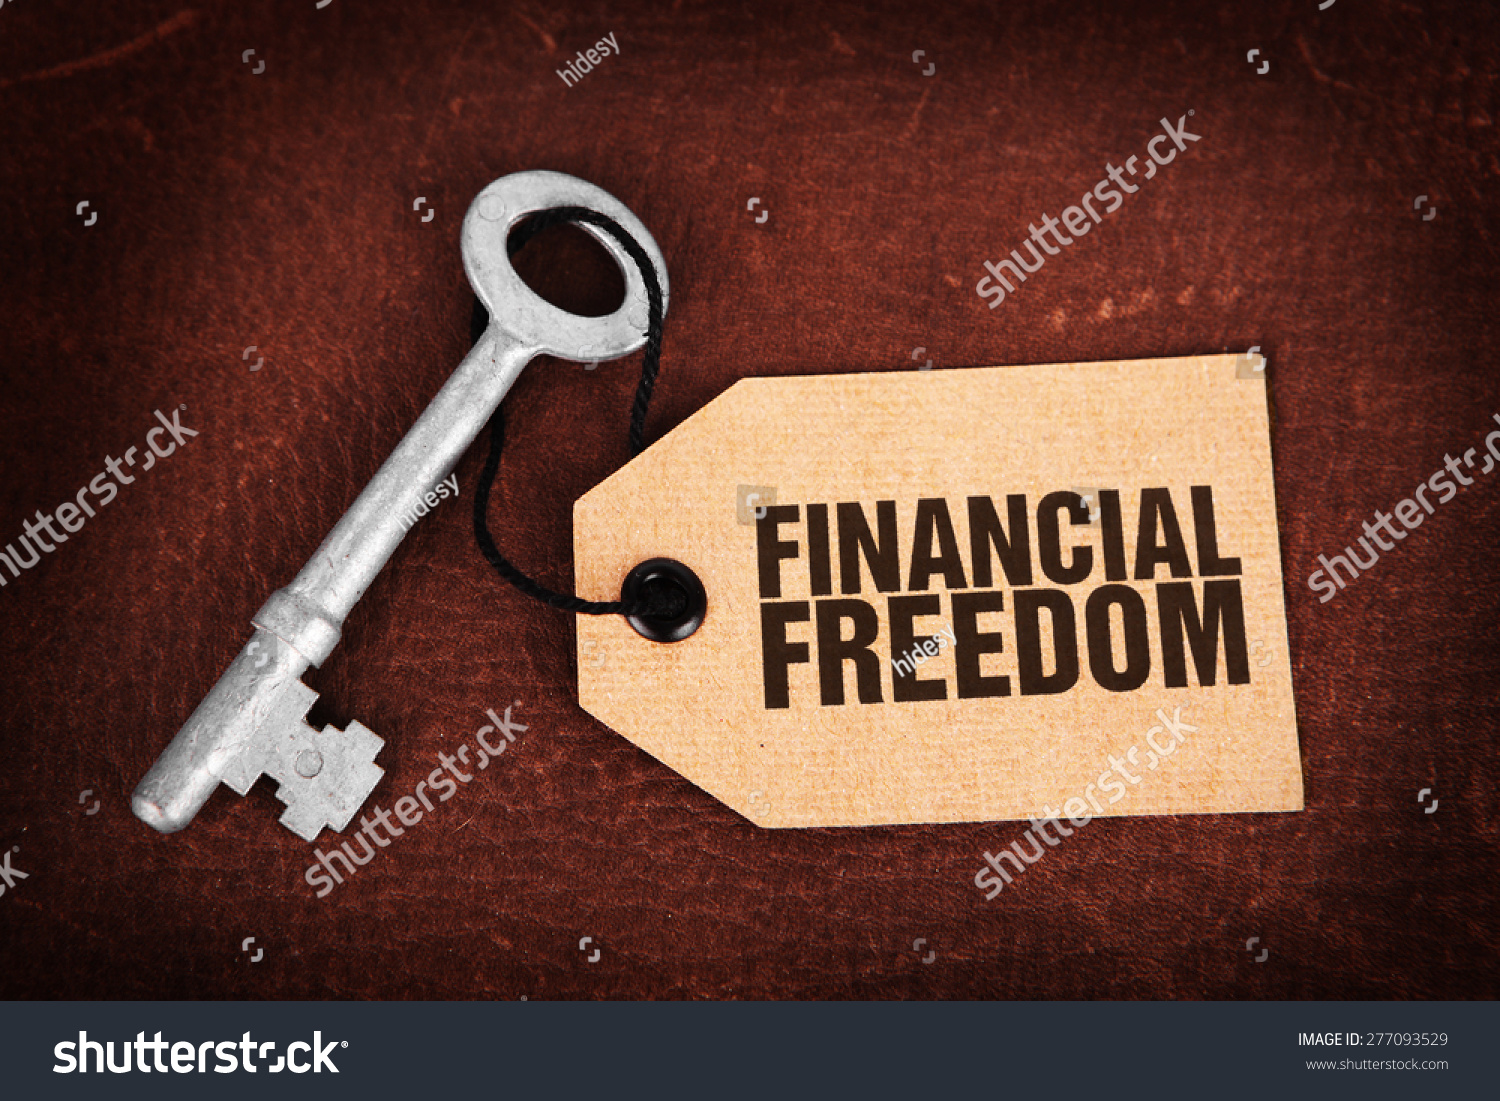 Images of financial freedom forex prekyba valiutu kursai delfi